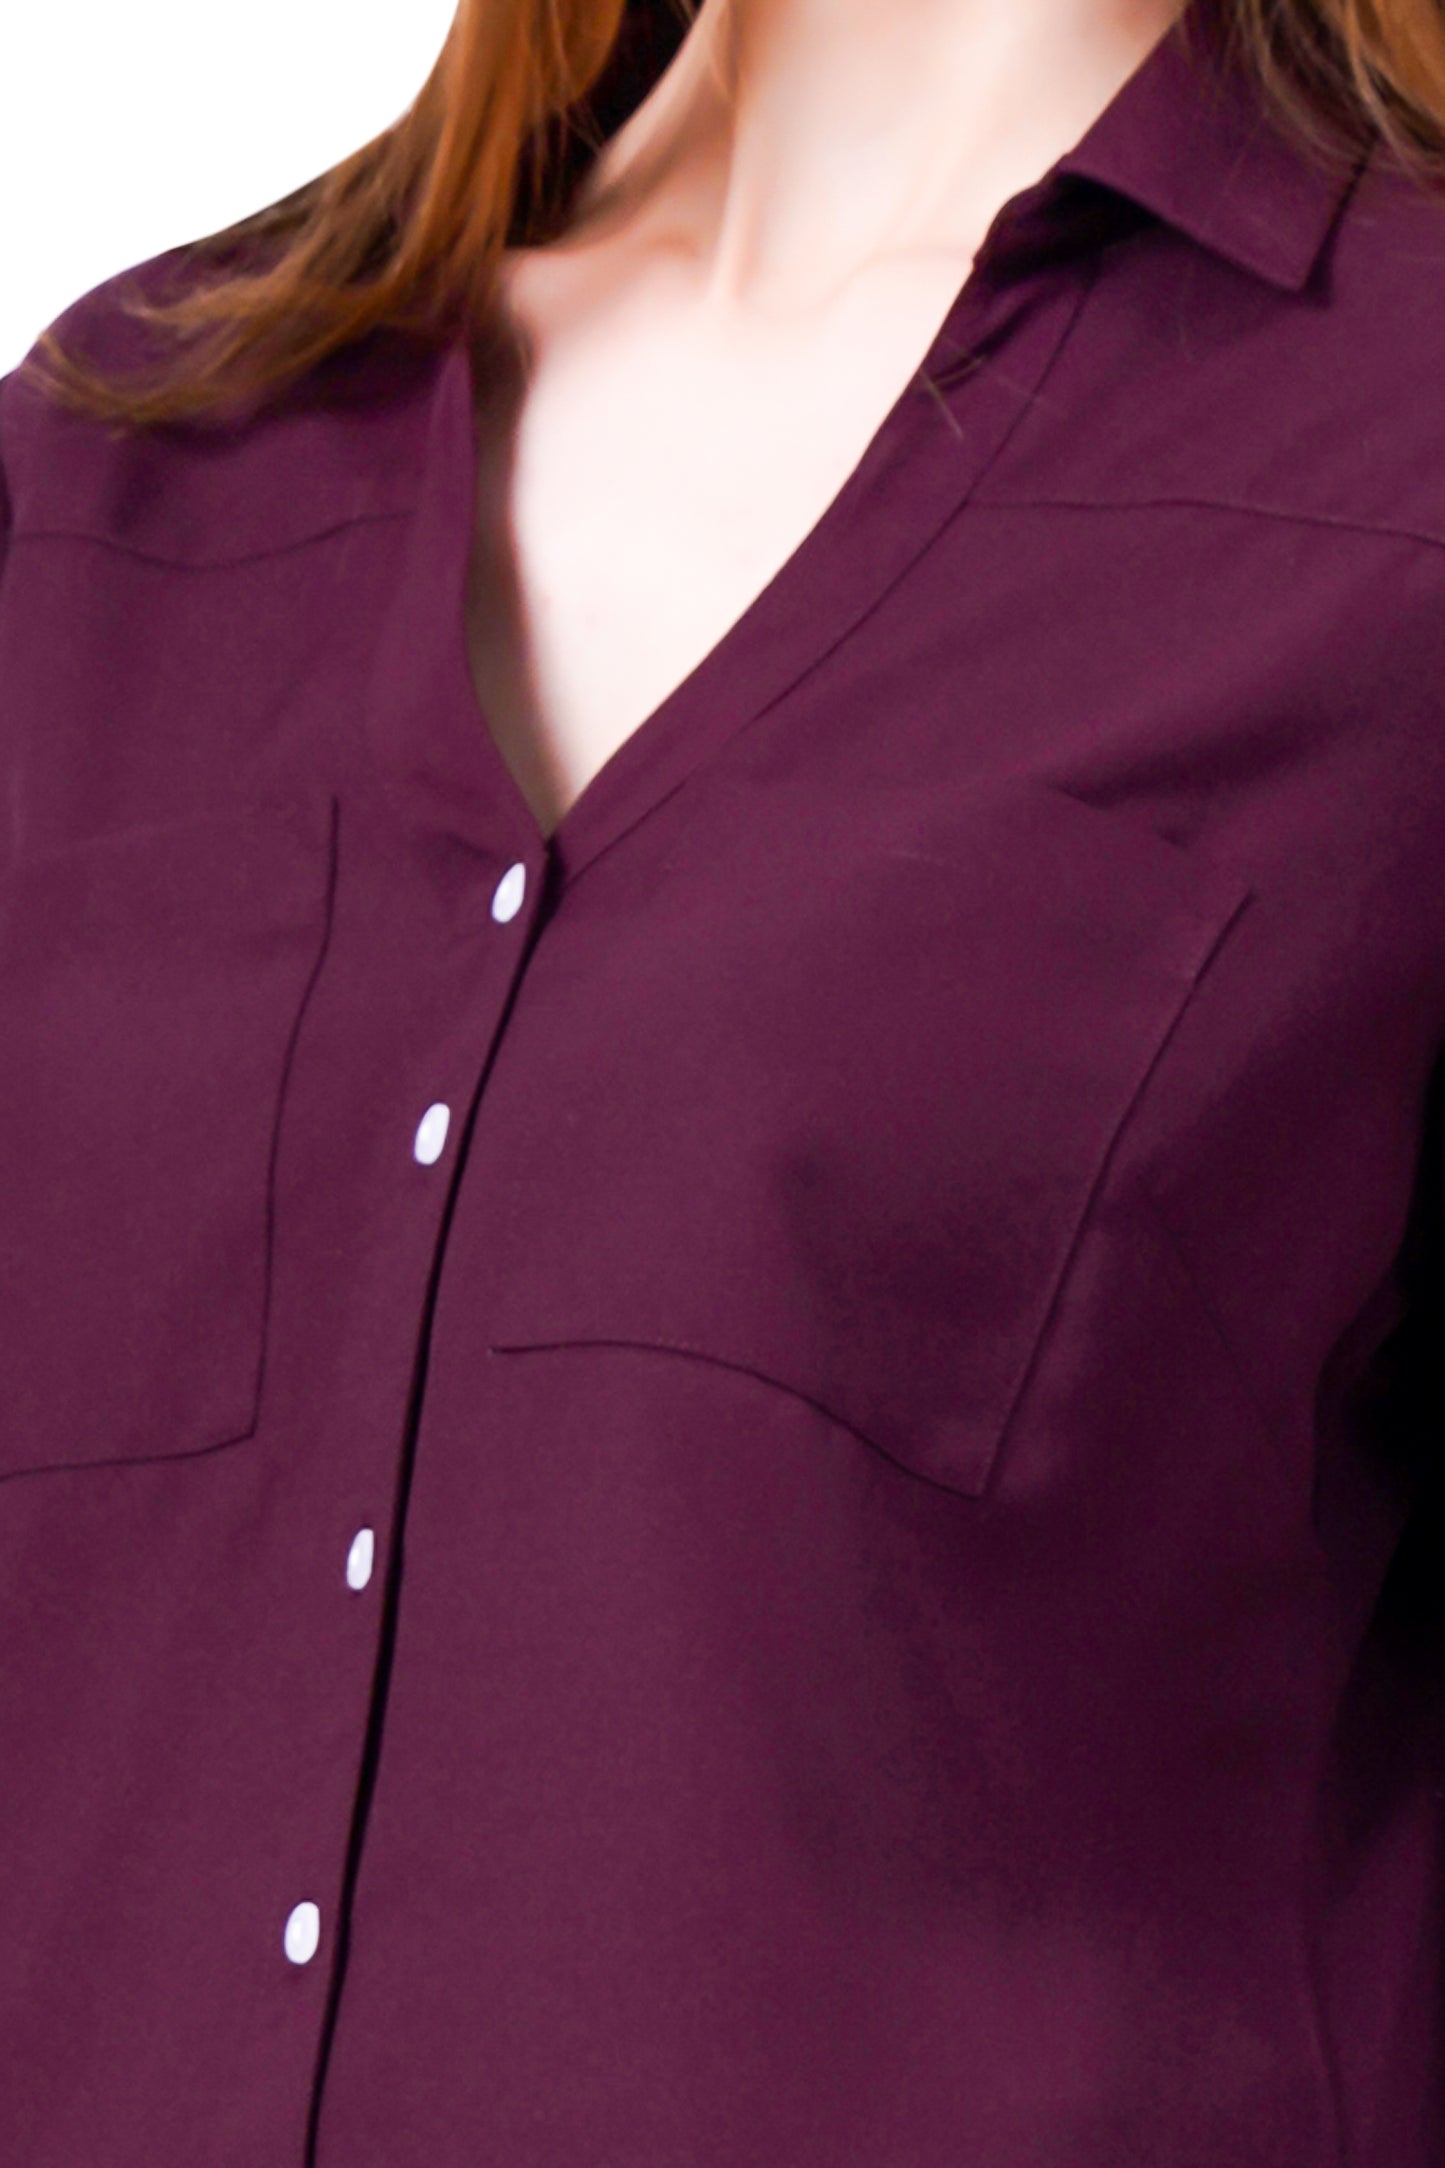 NUEVOSDAMAS Solid Wine Casual/Formal Women Full Sleeve Shirt